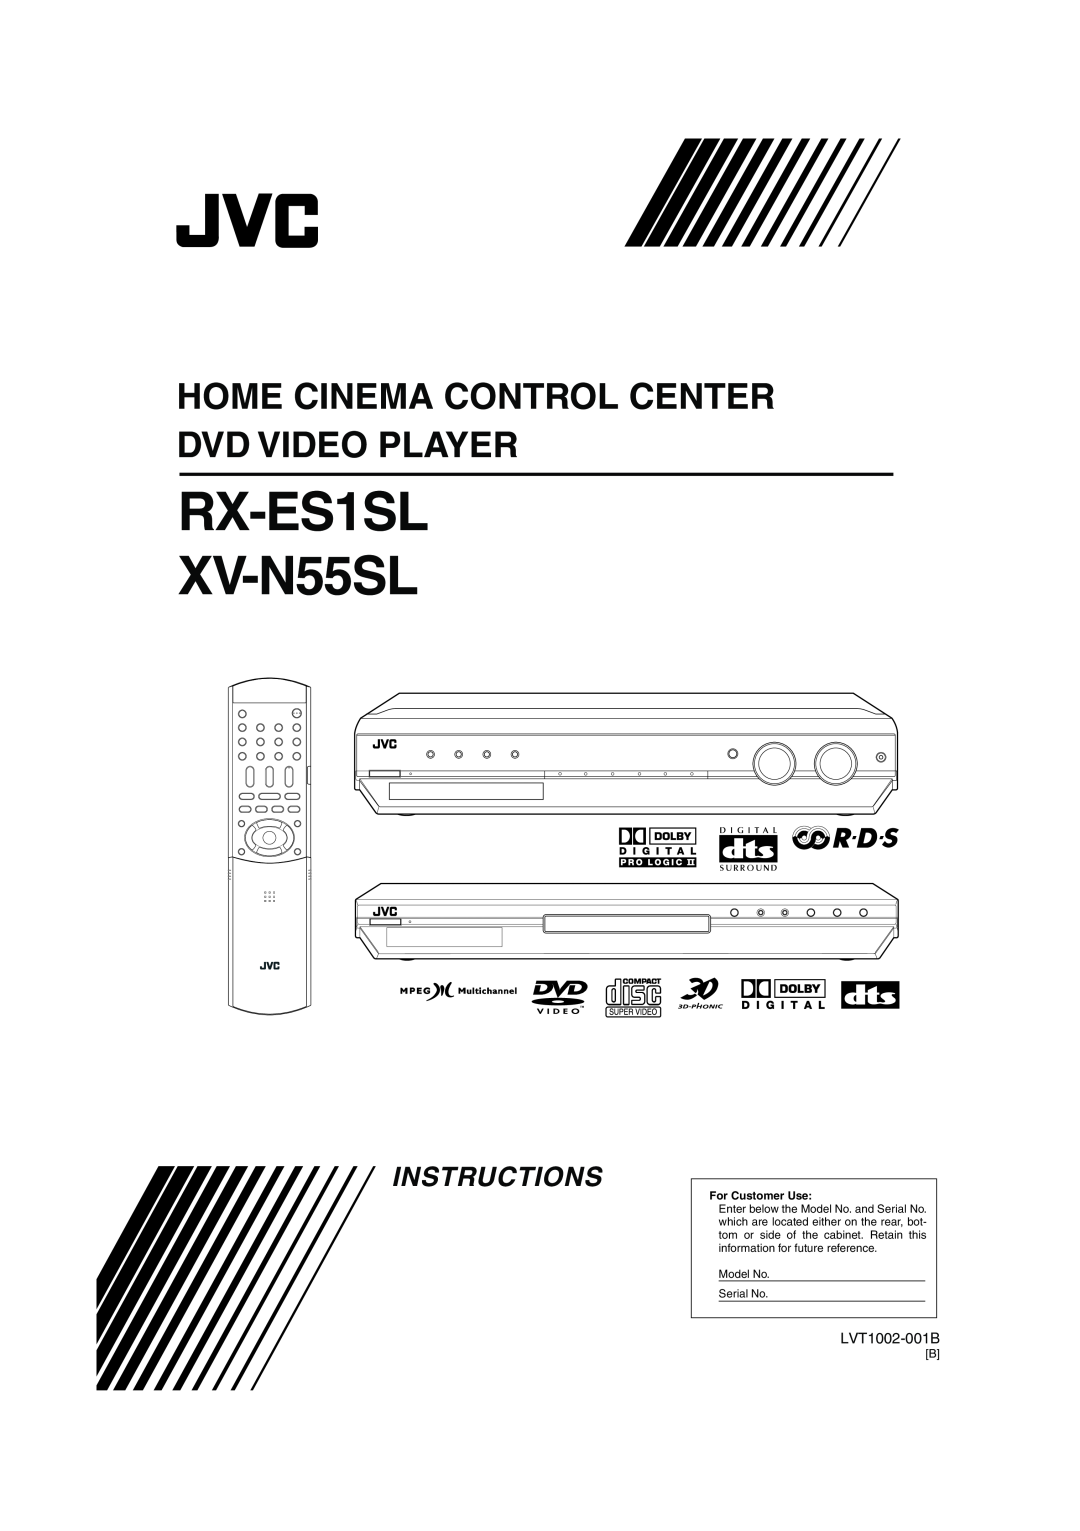 JVC LVT1002-001B manual Instructions, RX-ES1SL XV-N55SL, Home Cinema Control Center Dvd Video Player, For Customer Use 